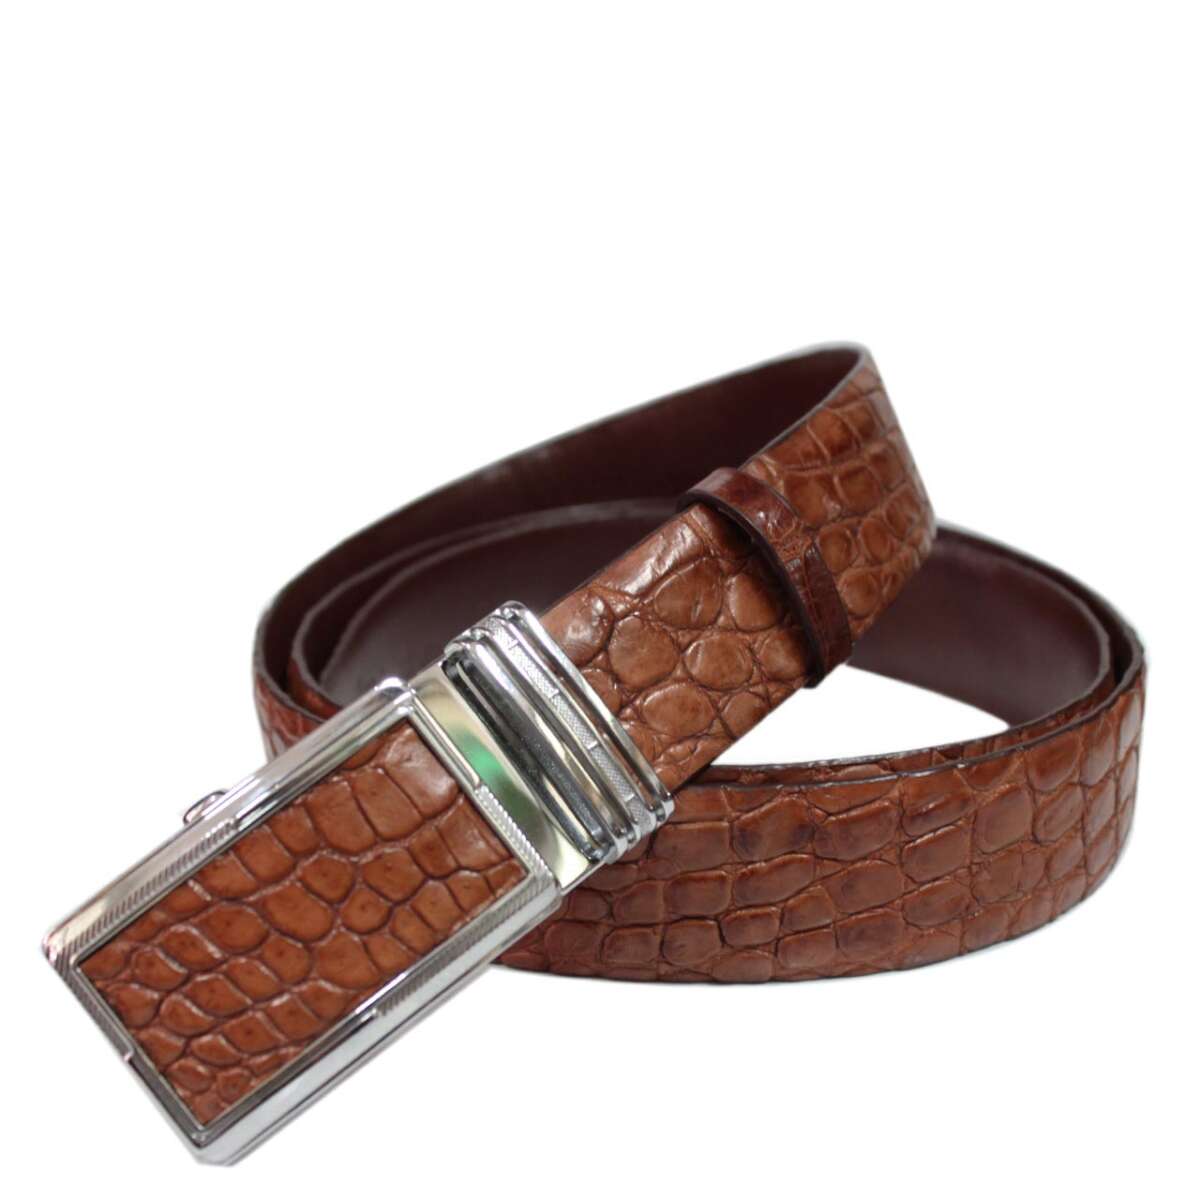 Crocodile leather belt S607b